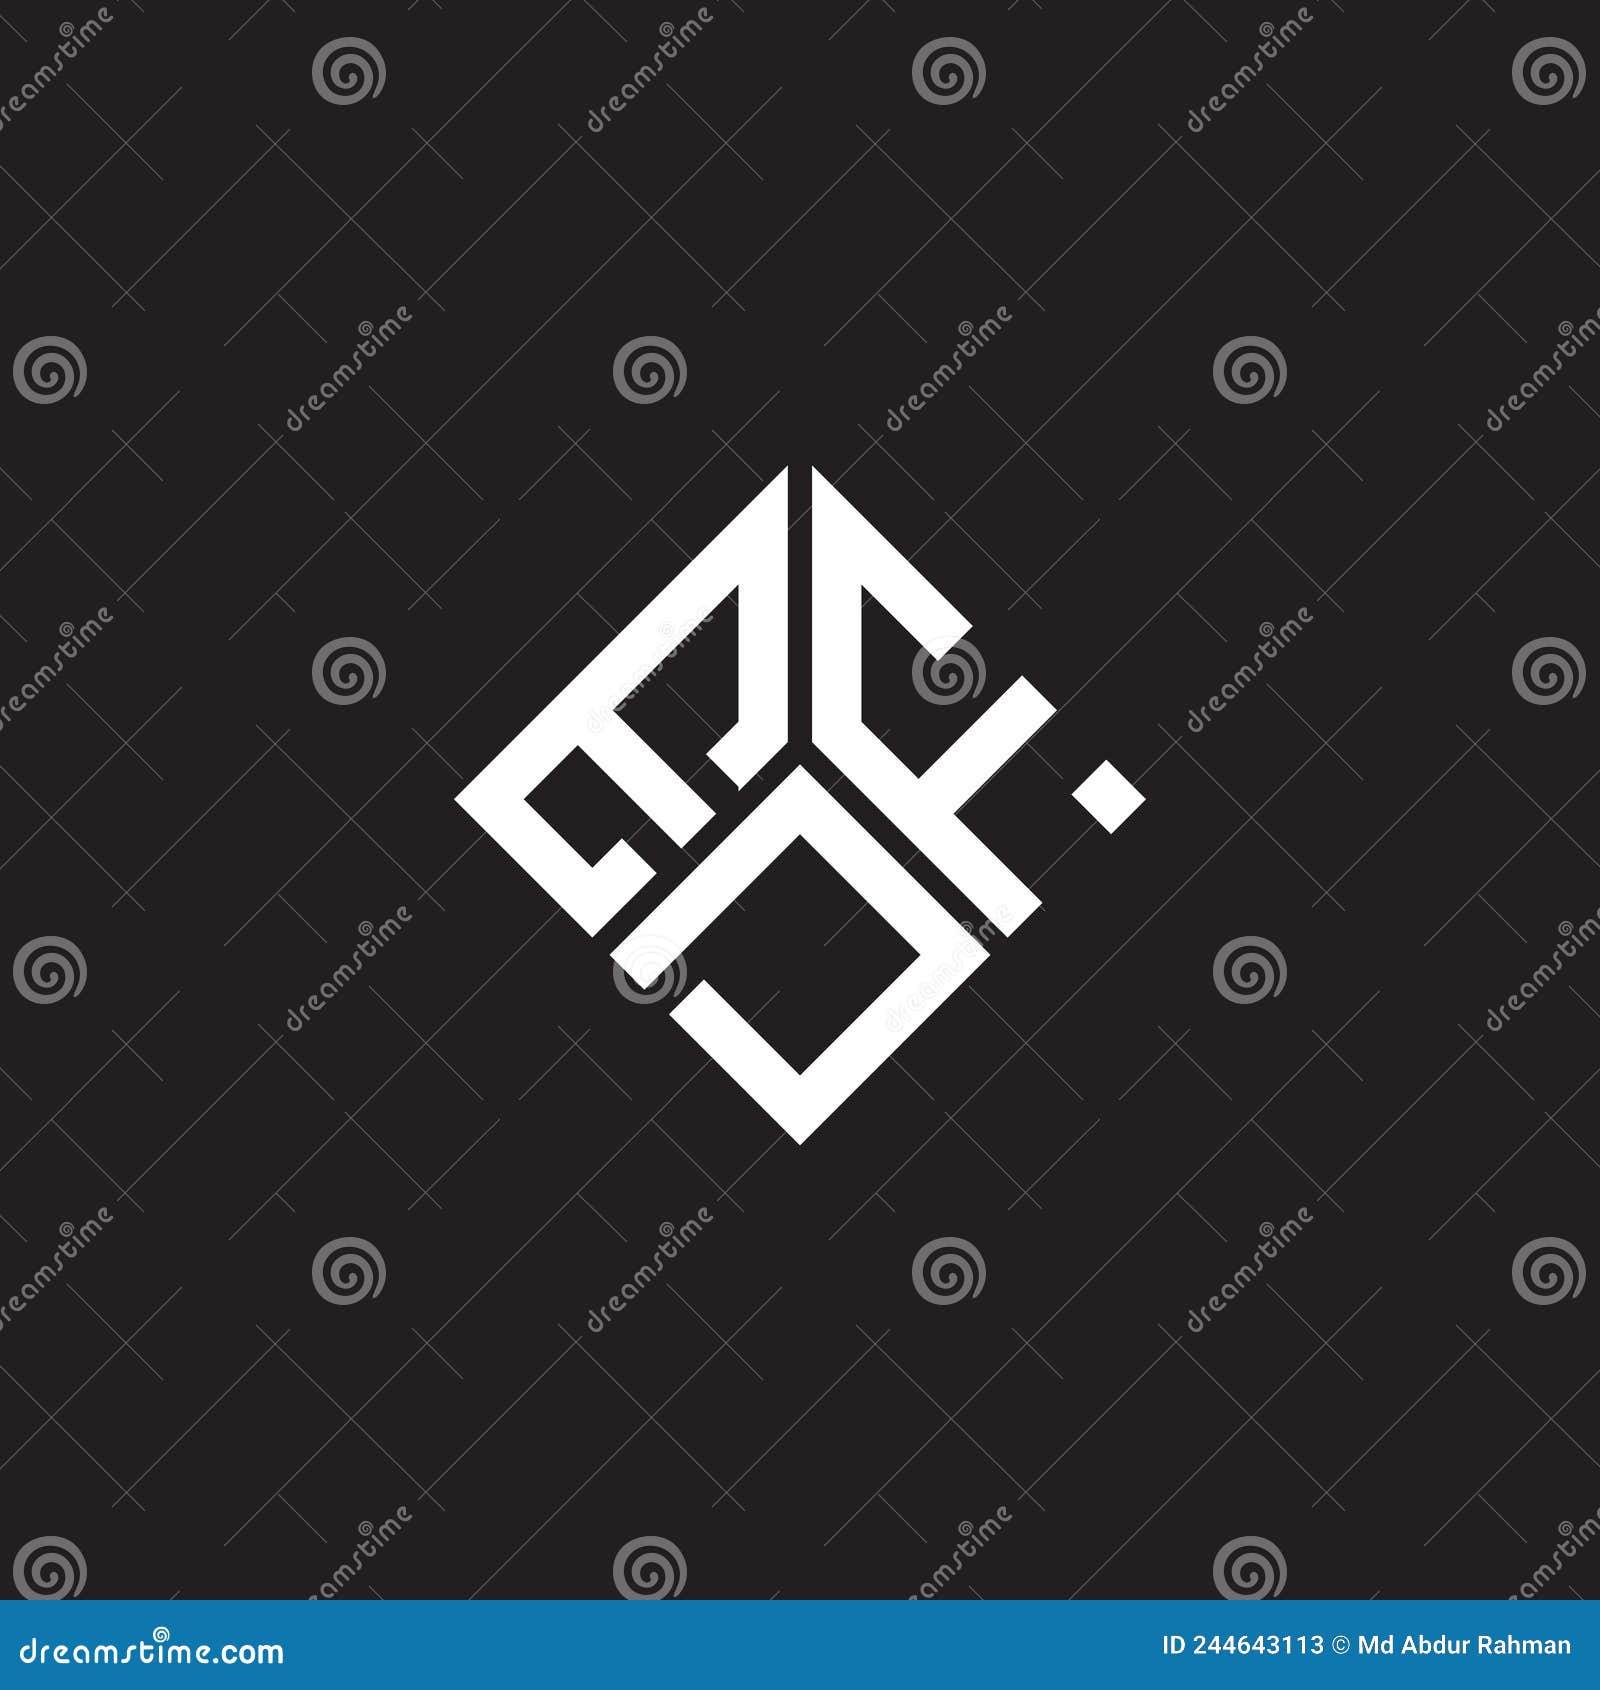 edf letter logo  on black background. edf creative initials letter logo concept. edf letter 